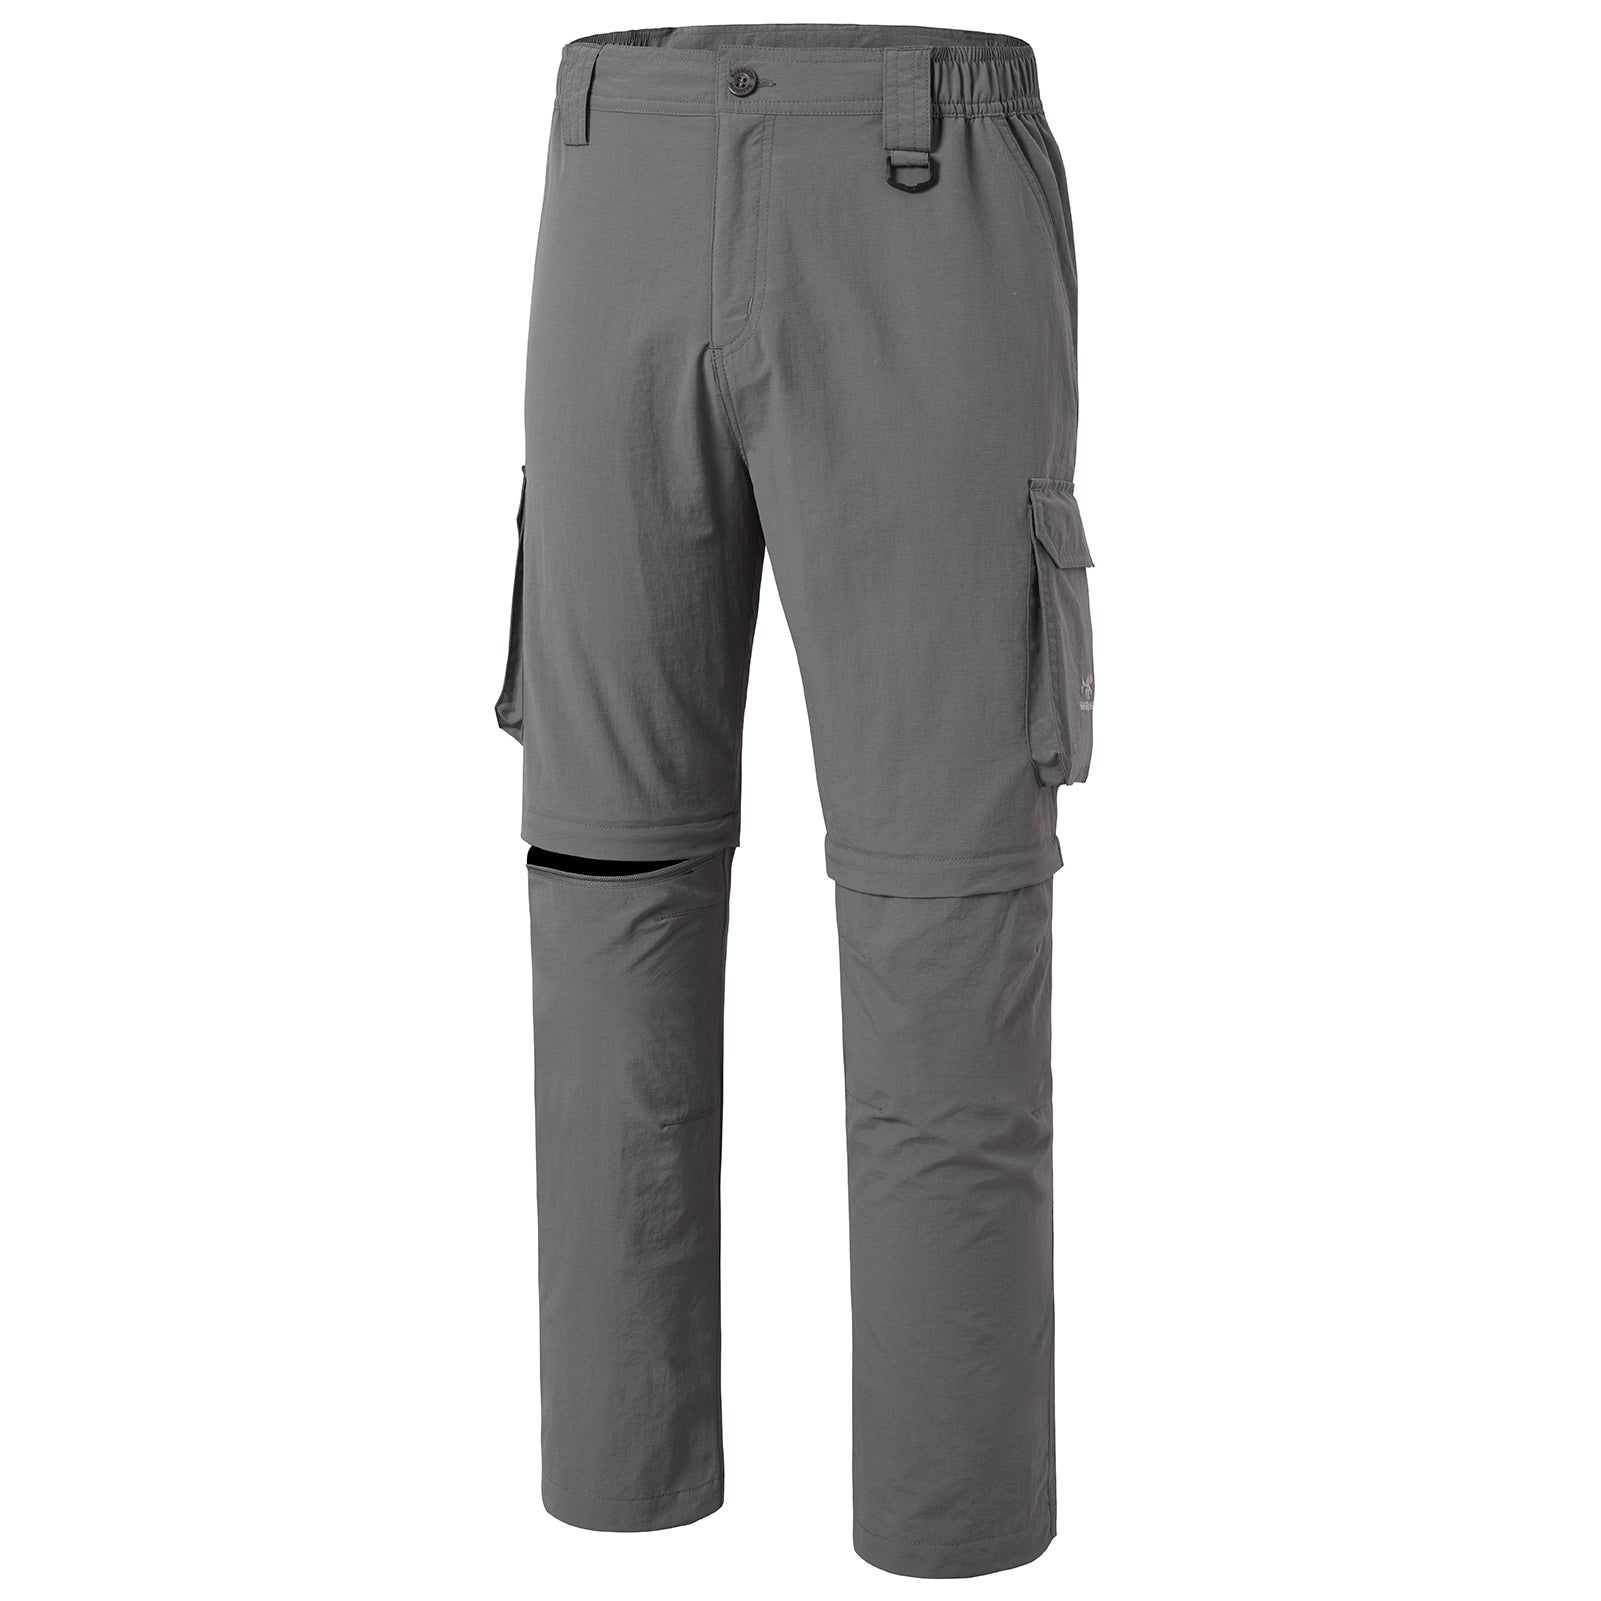 Men’s UPF 50+ Quick Dry Convertible Pants FP02M - Khaki / 32W×30L